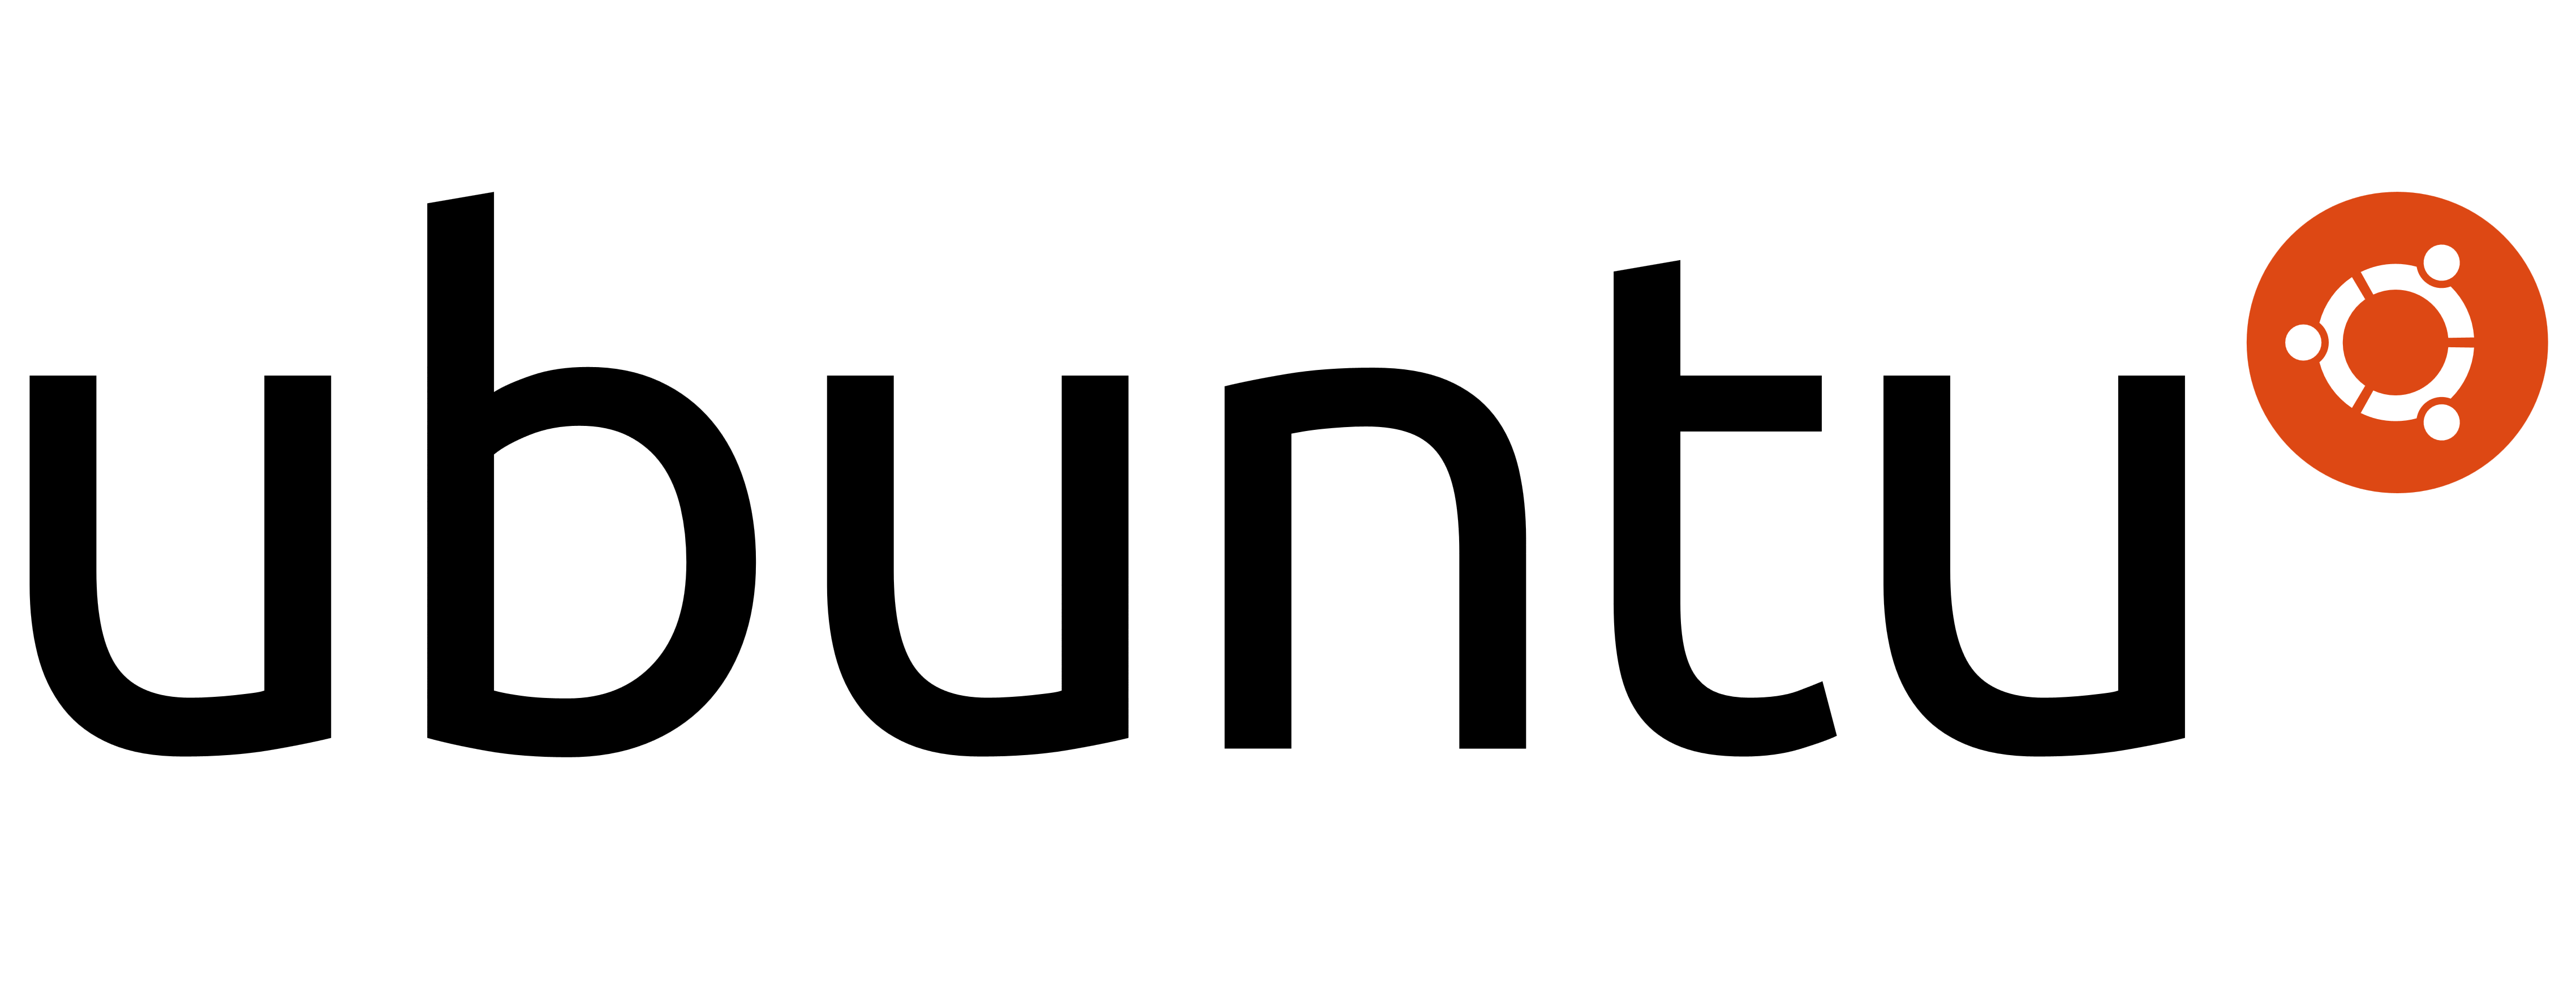 Ubuntu logo, logotype